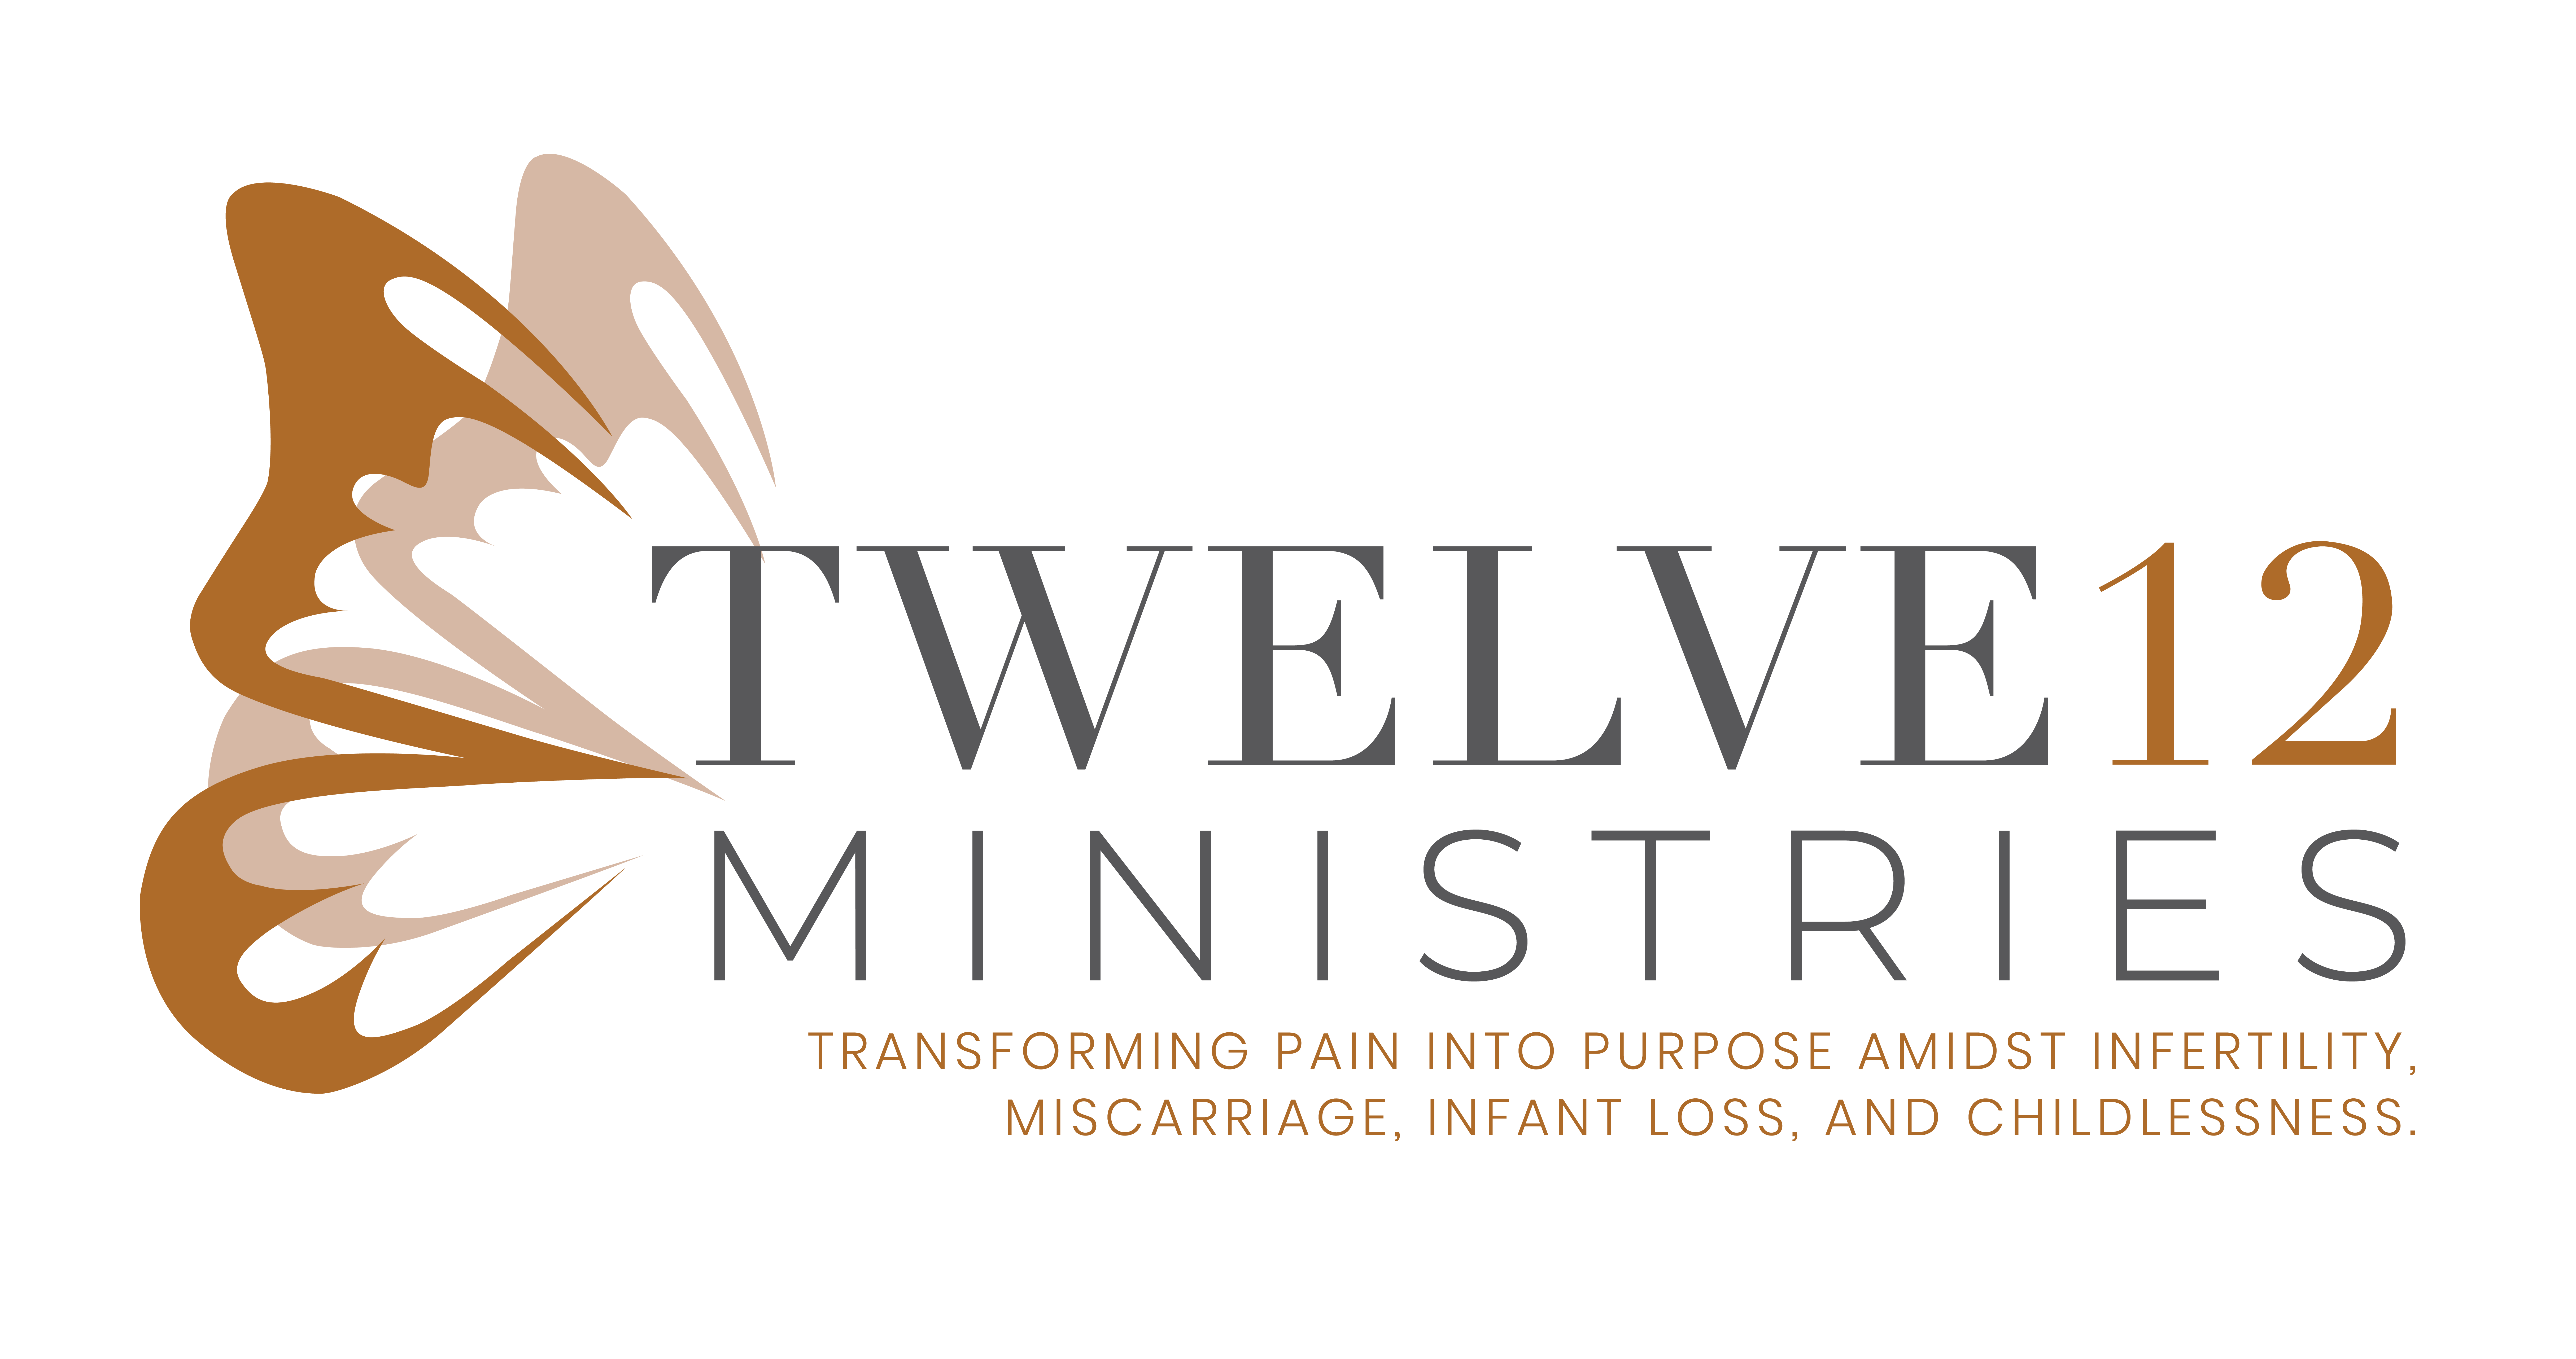 Twelve 12 Ministries